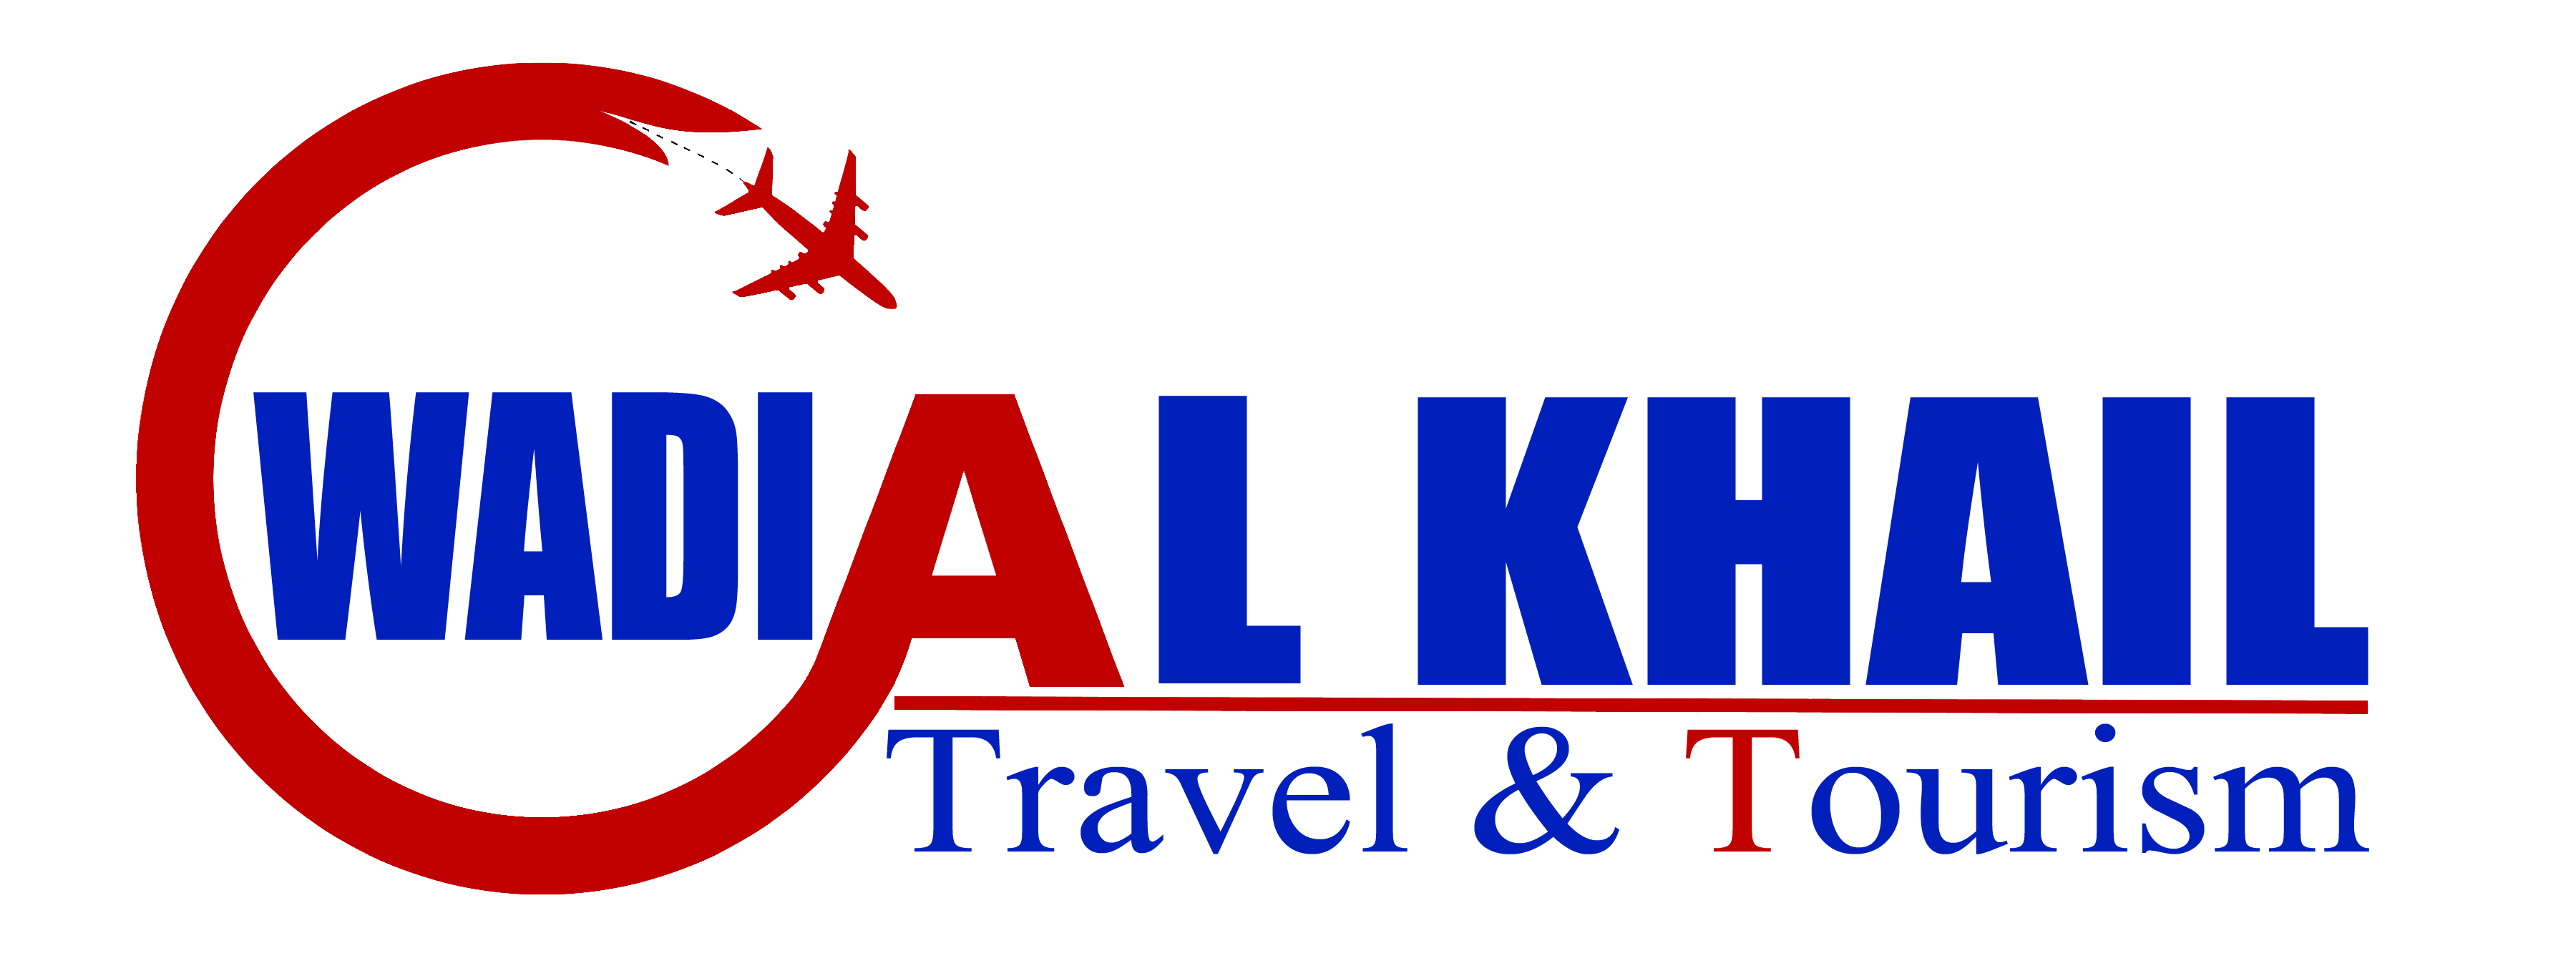 Wadi Al Khail Travel & Tourism | At Wadi Al Khail, we pride ourselves ...